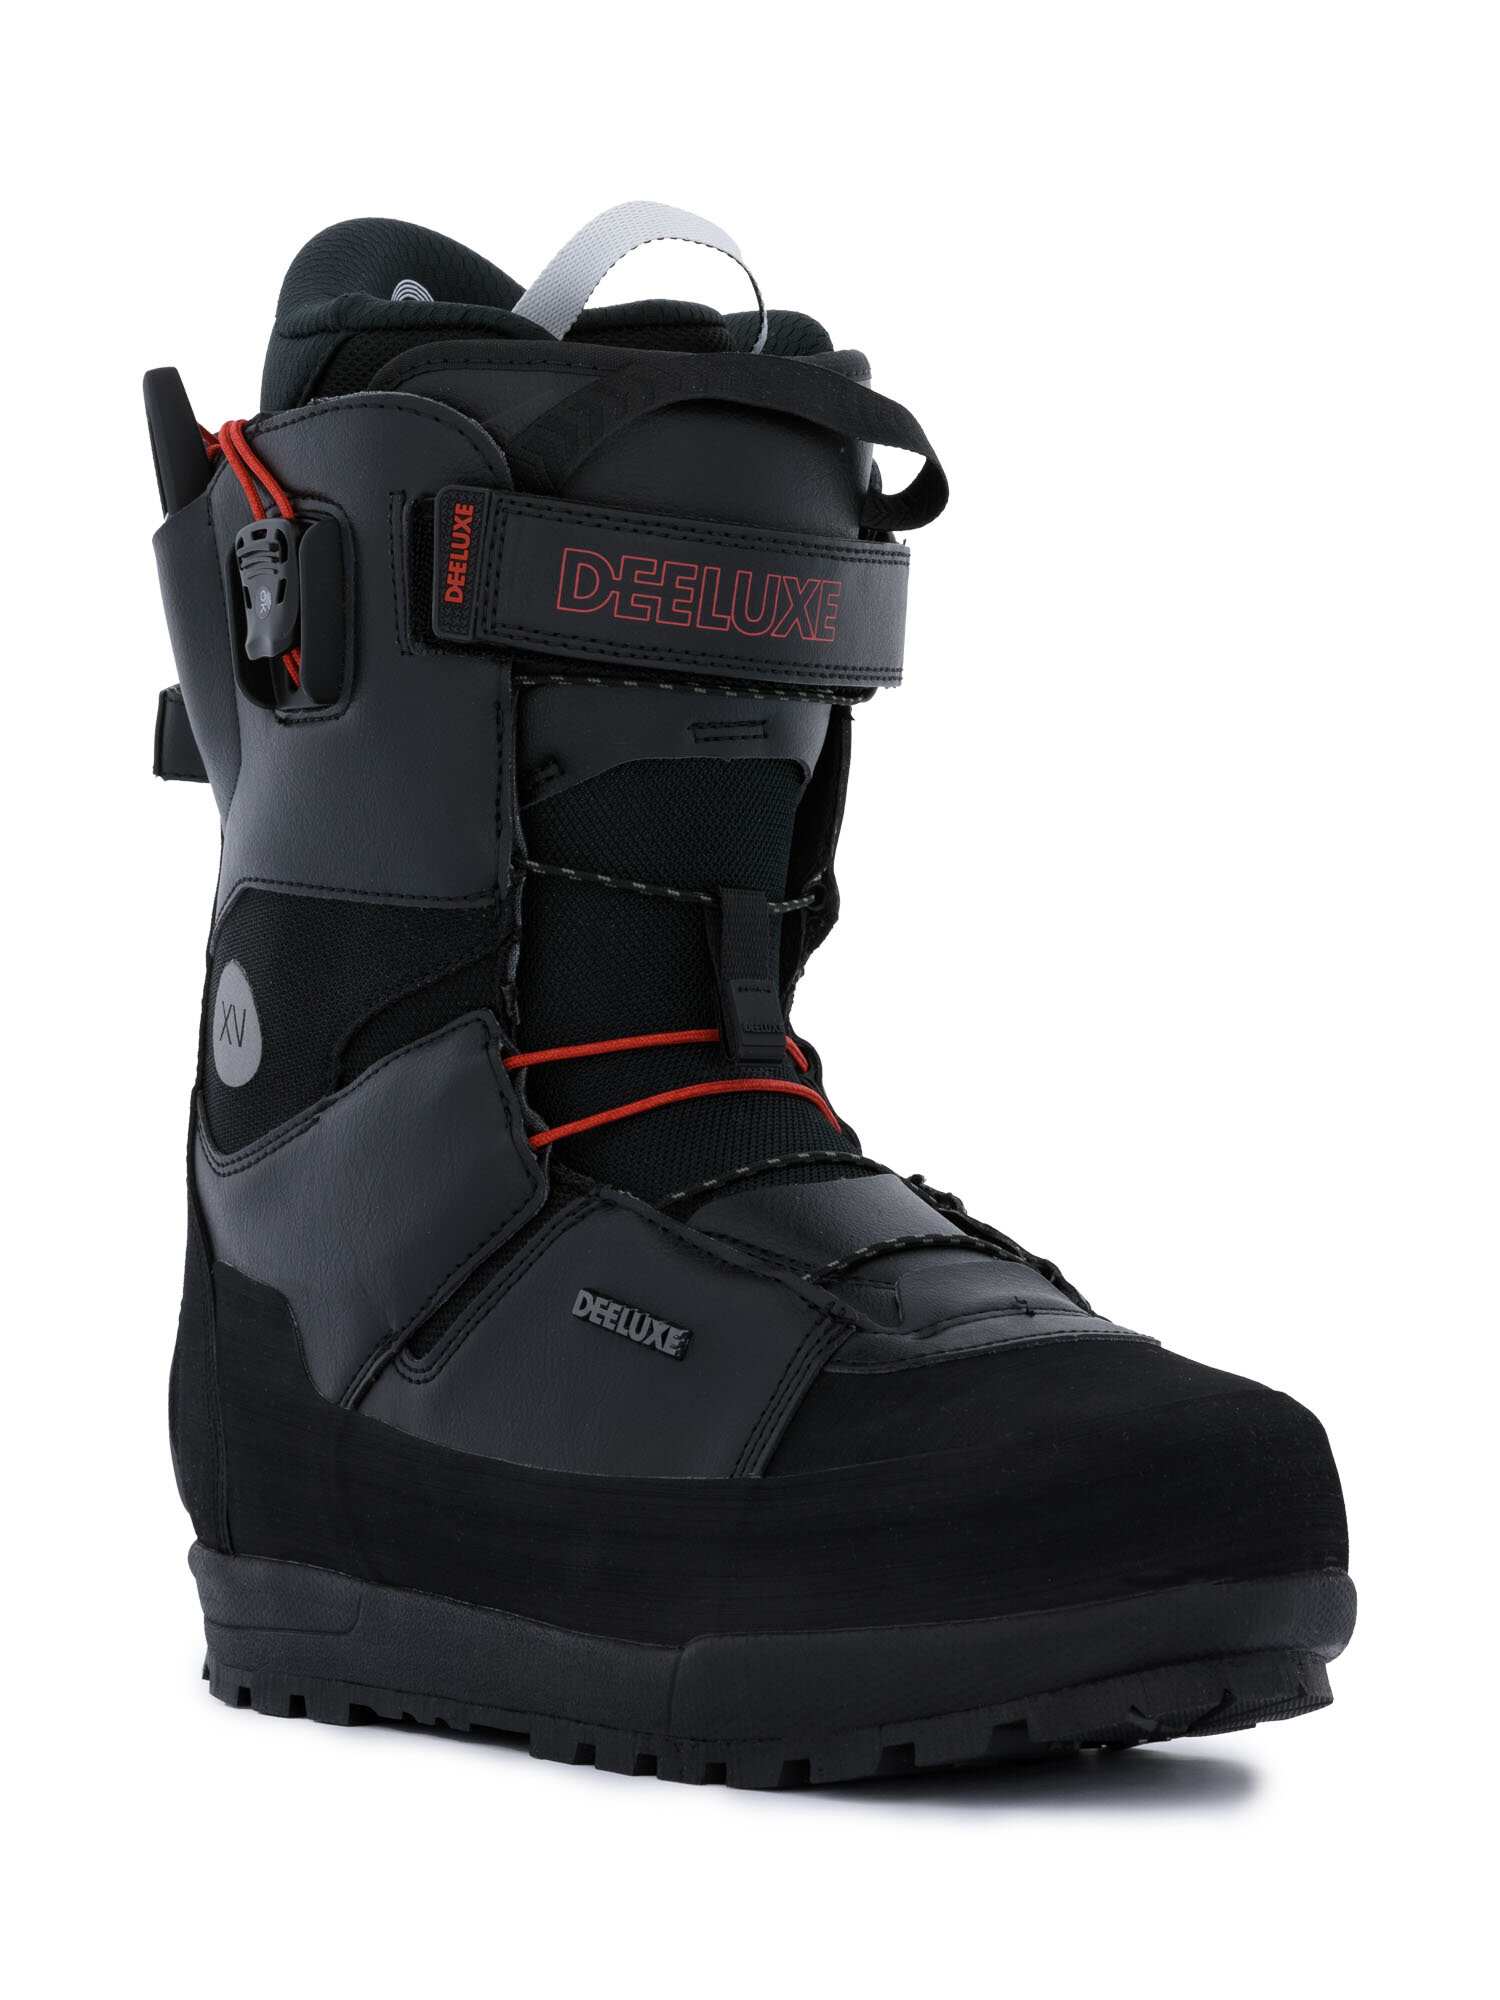 Ботинки для сноуборда DEELUXE Spark XV Black (см:28,5)